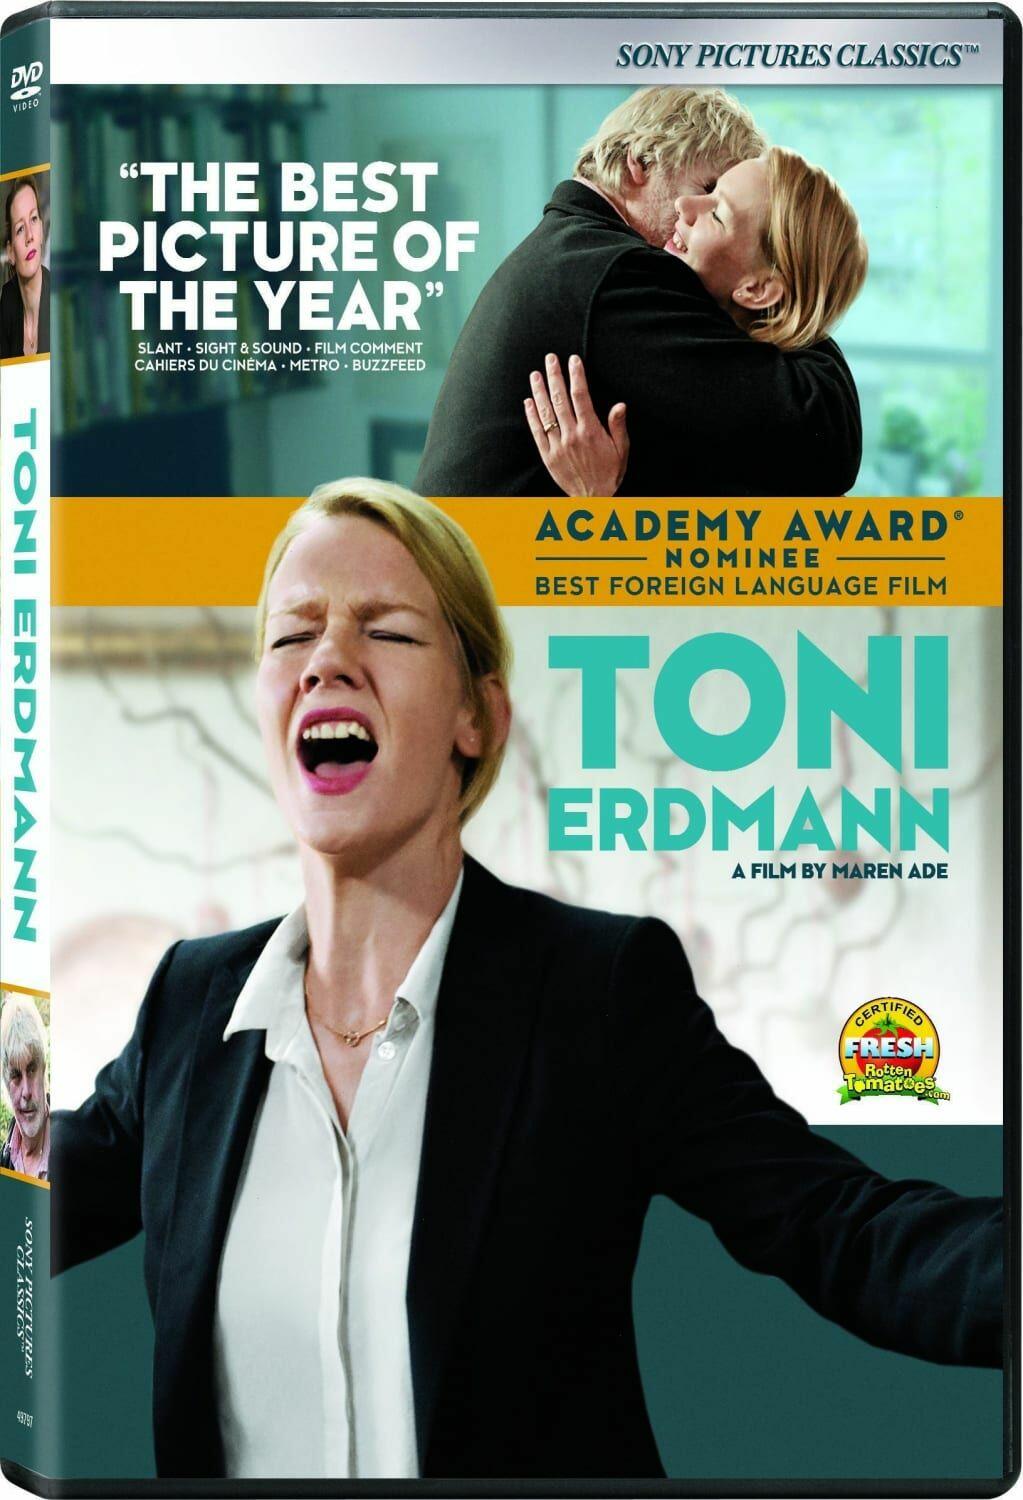 Toni Erdmann (DVD) on MovieShack